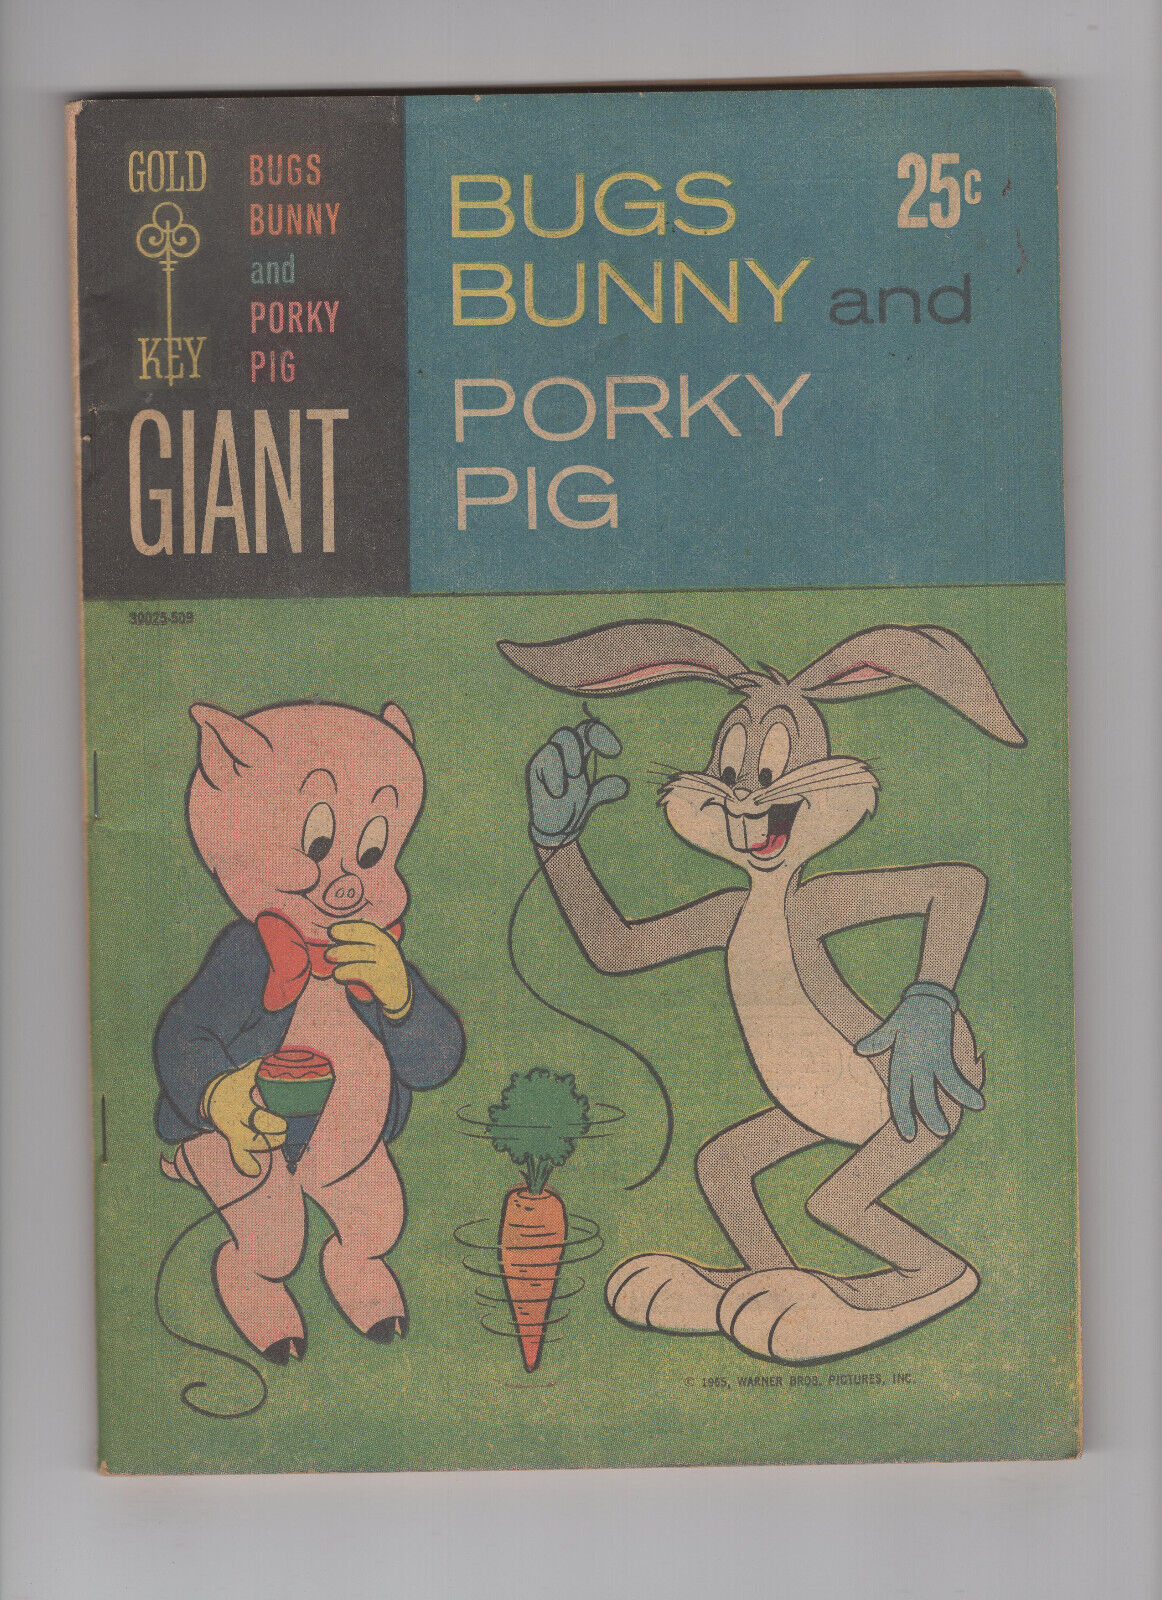 Bugs Bunny and Porky Pig #1 (Gold Key Comics, 1965)